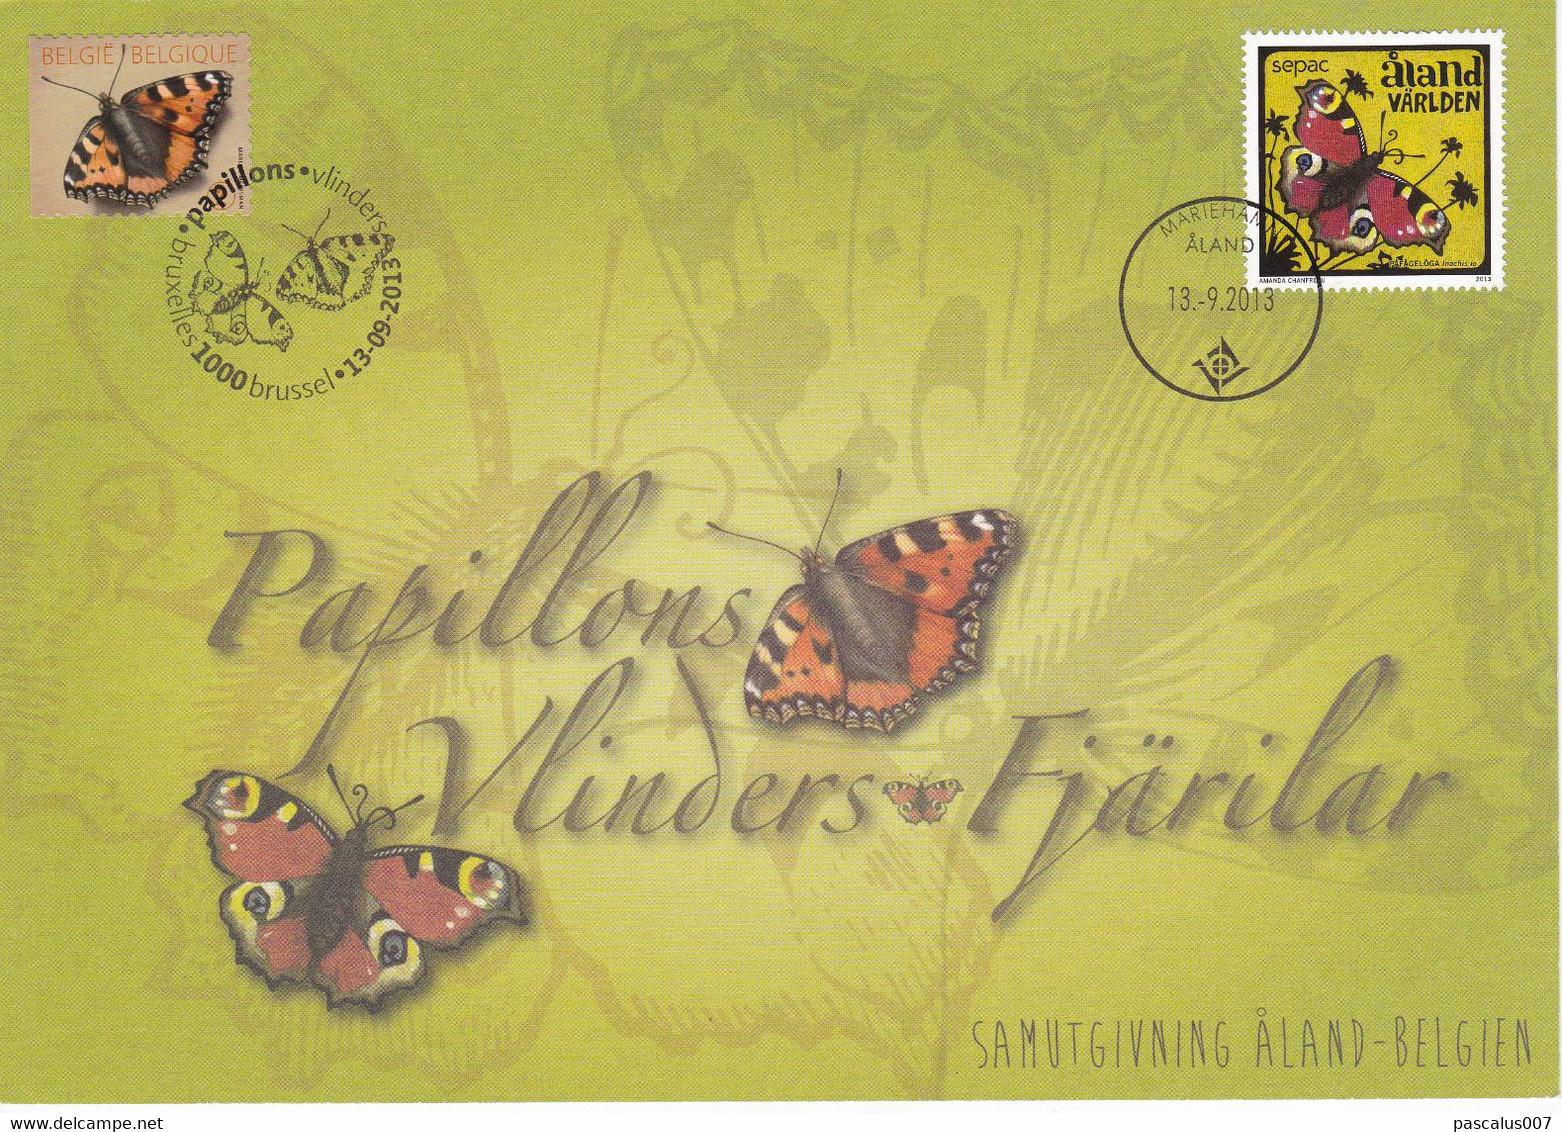 18-47 4321  EC CS HK BK 4321 FDC Emission Commune Belgique Aland  Carte Souvenir  Insecte Papillon Aglais Urticae Vlinde - Erinnerungskarten – Gemeinschaftsausgaben [HK]